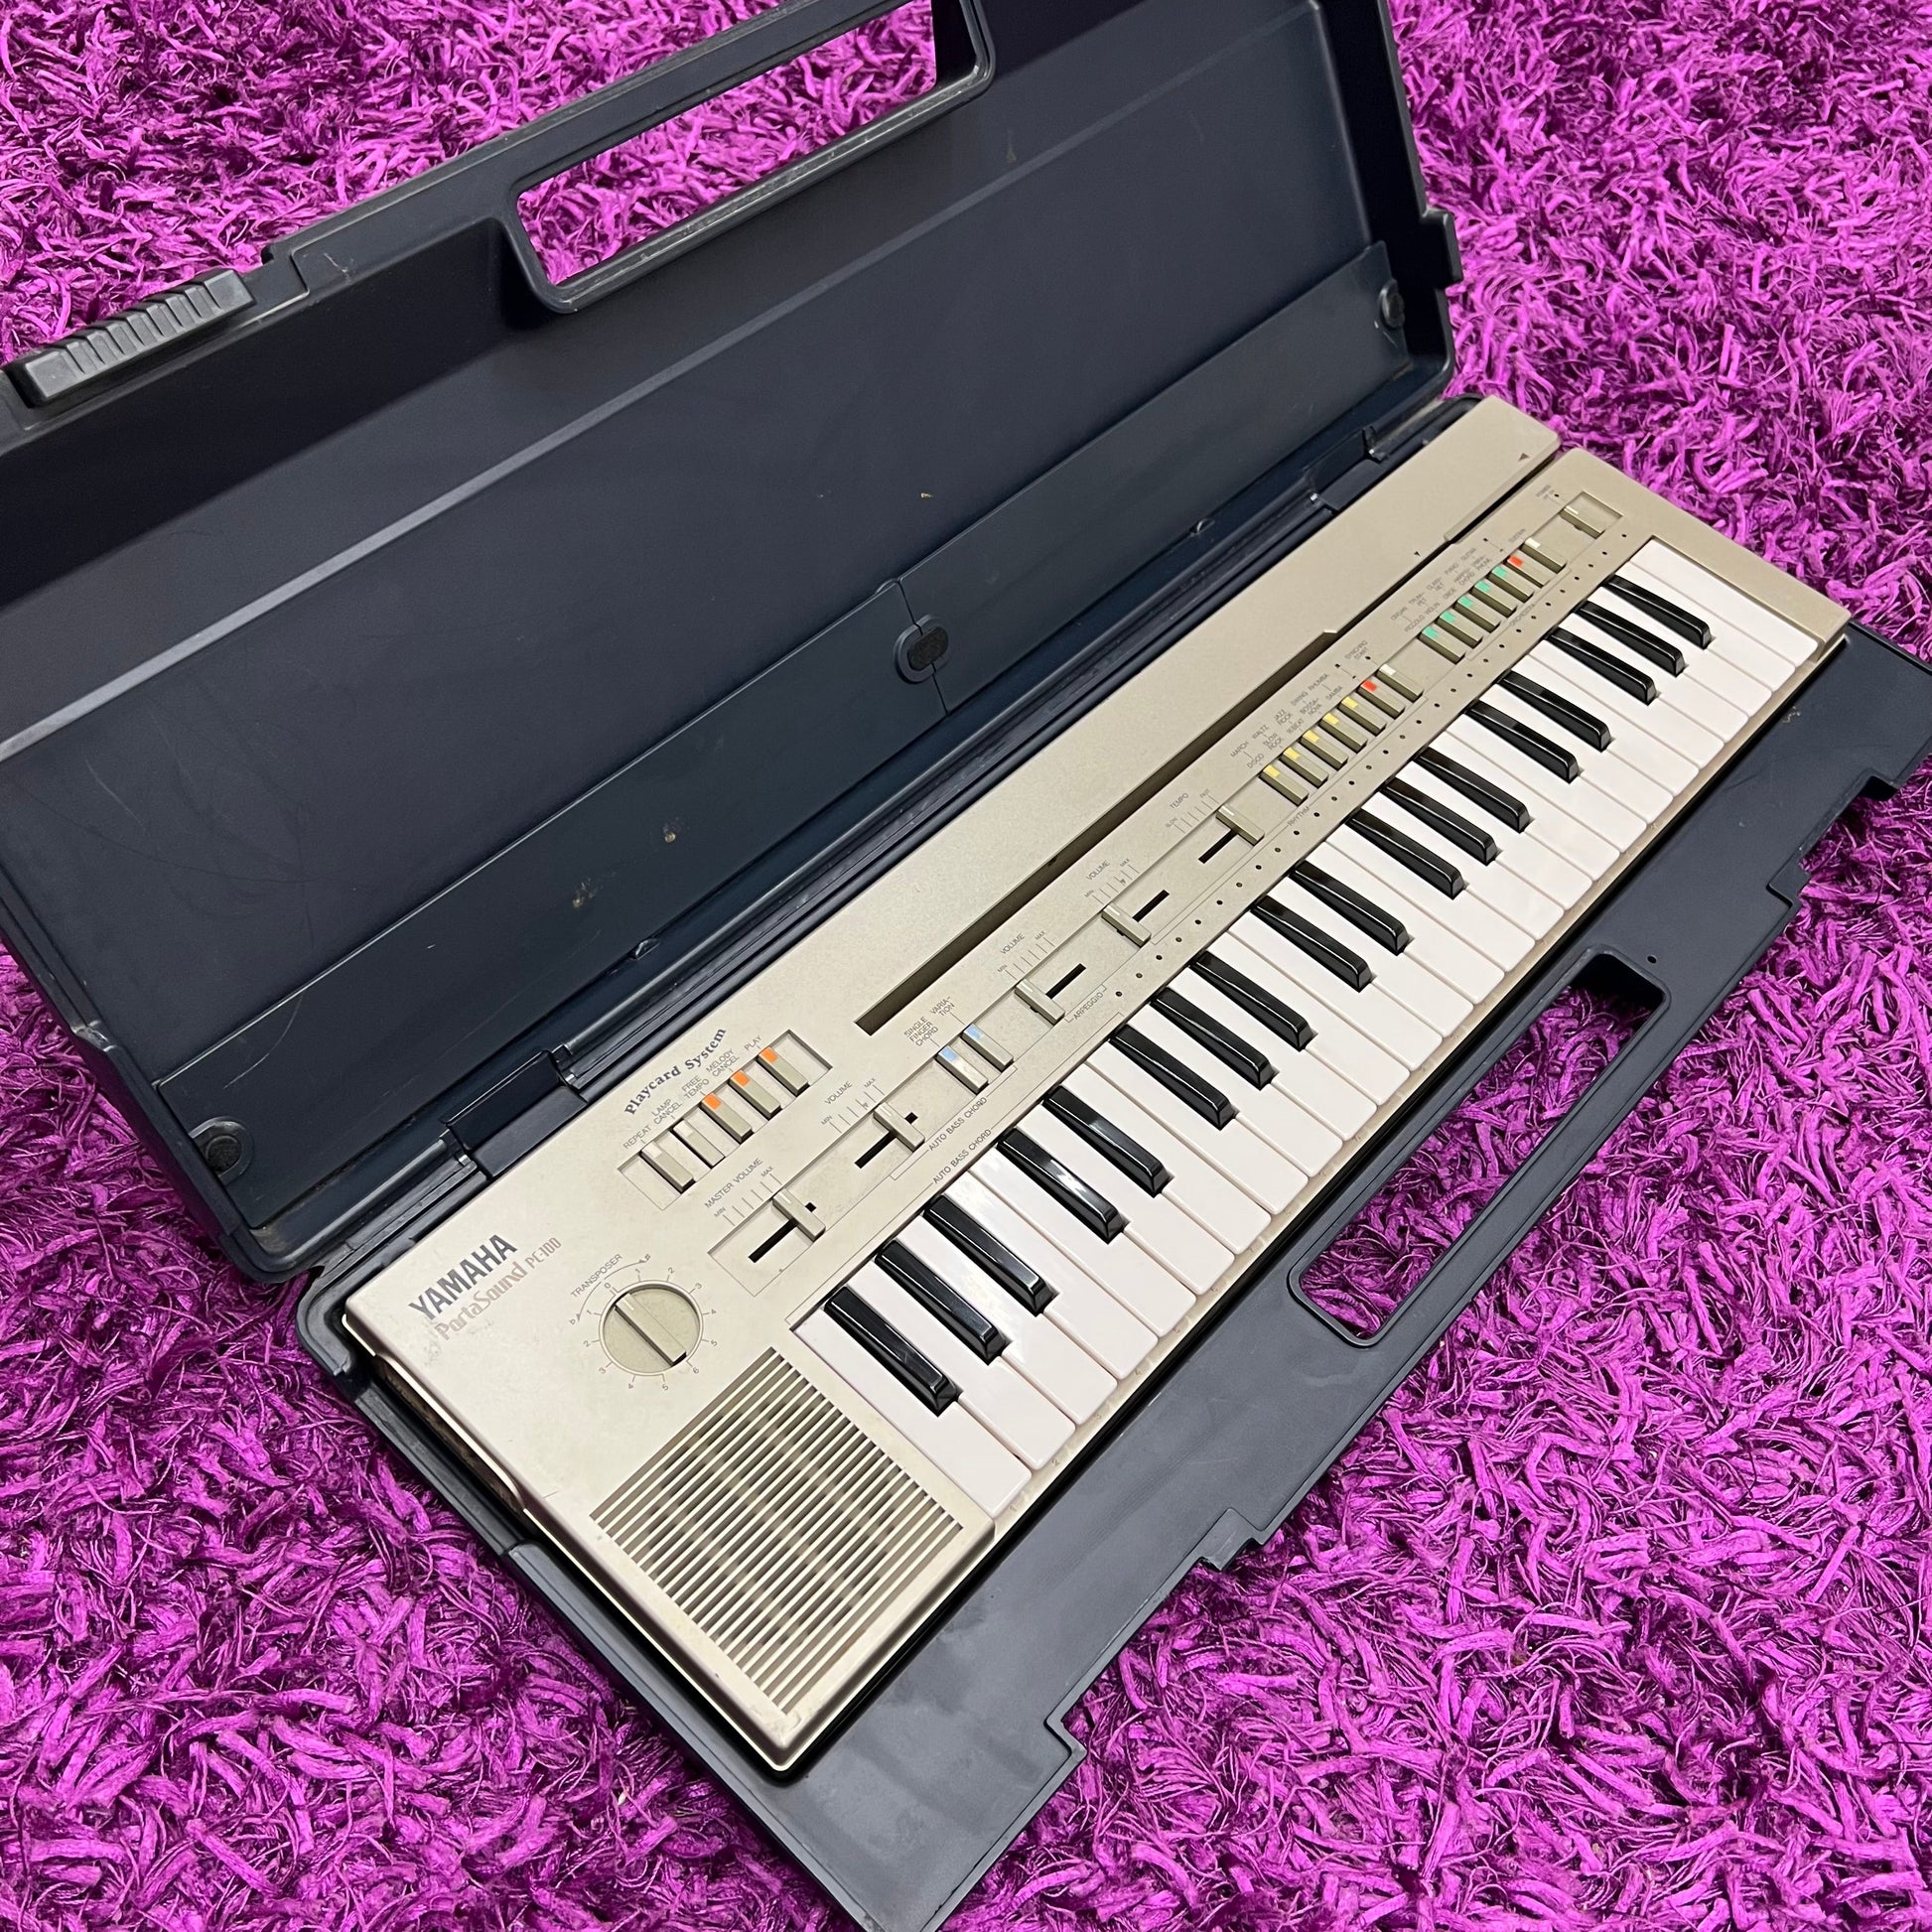 Yamaha Porta Sound PC-100 1980's Synth w/ Case